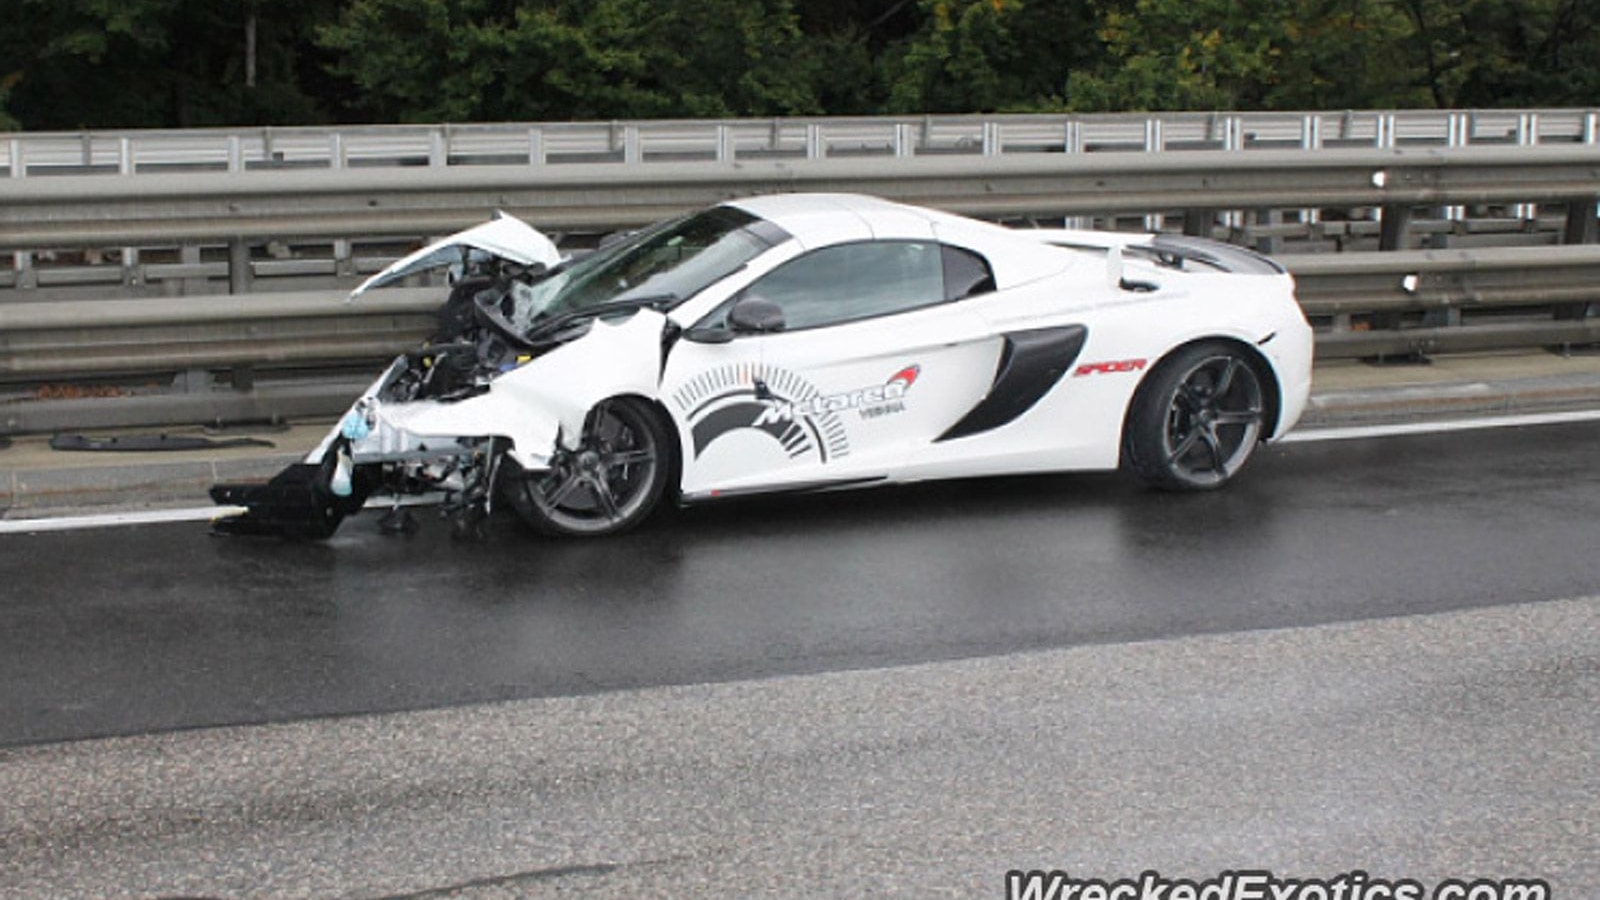 McLaren 650S Spider that crashed on a highway in Austria (Image via Wrecked Exotics)